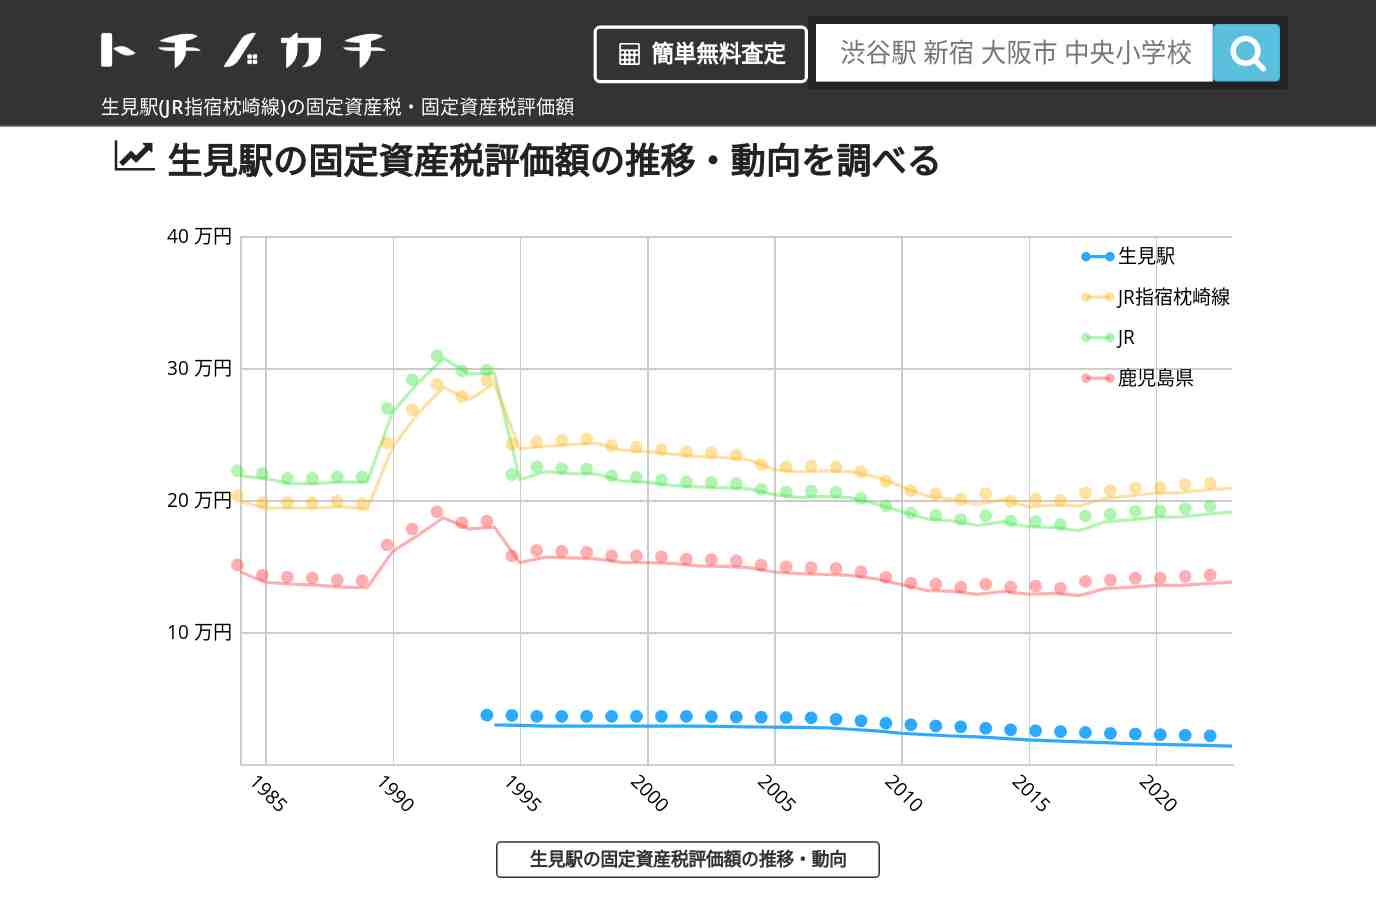 生見駅(JR指宿枕崎線)の固定資産税・固定資産税評価額 | トチノカチ